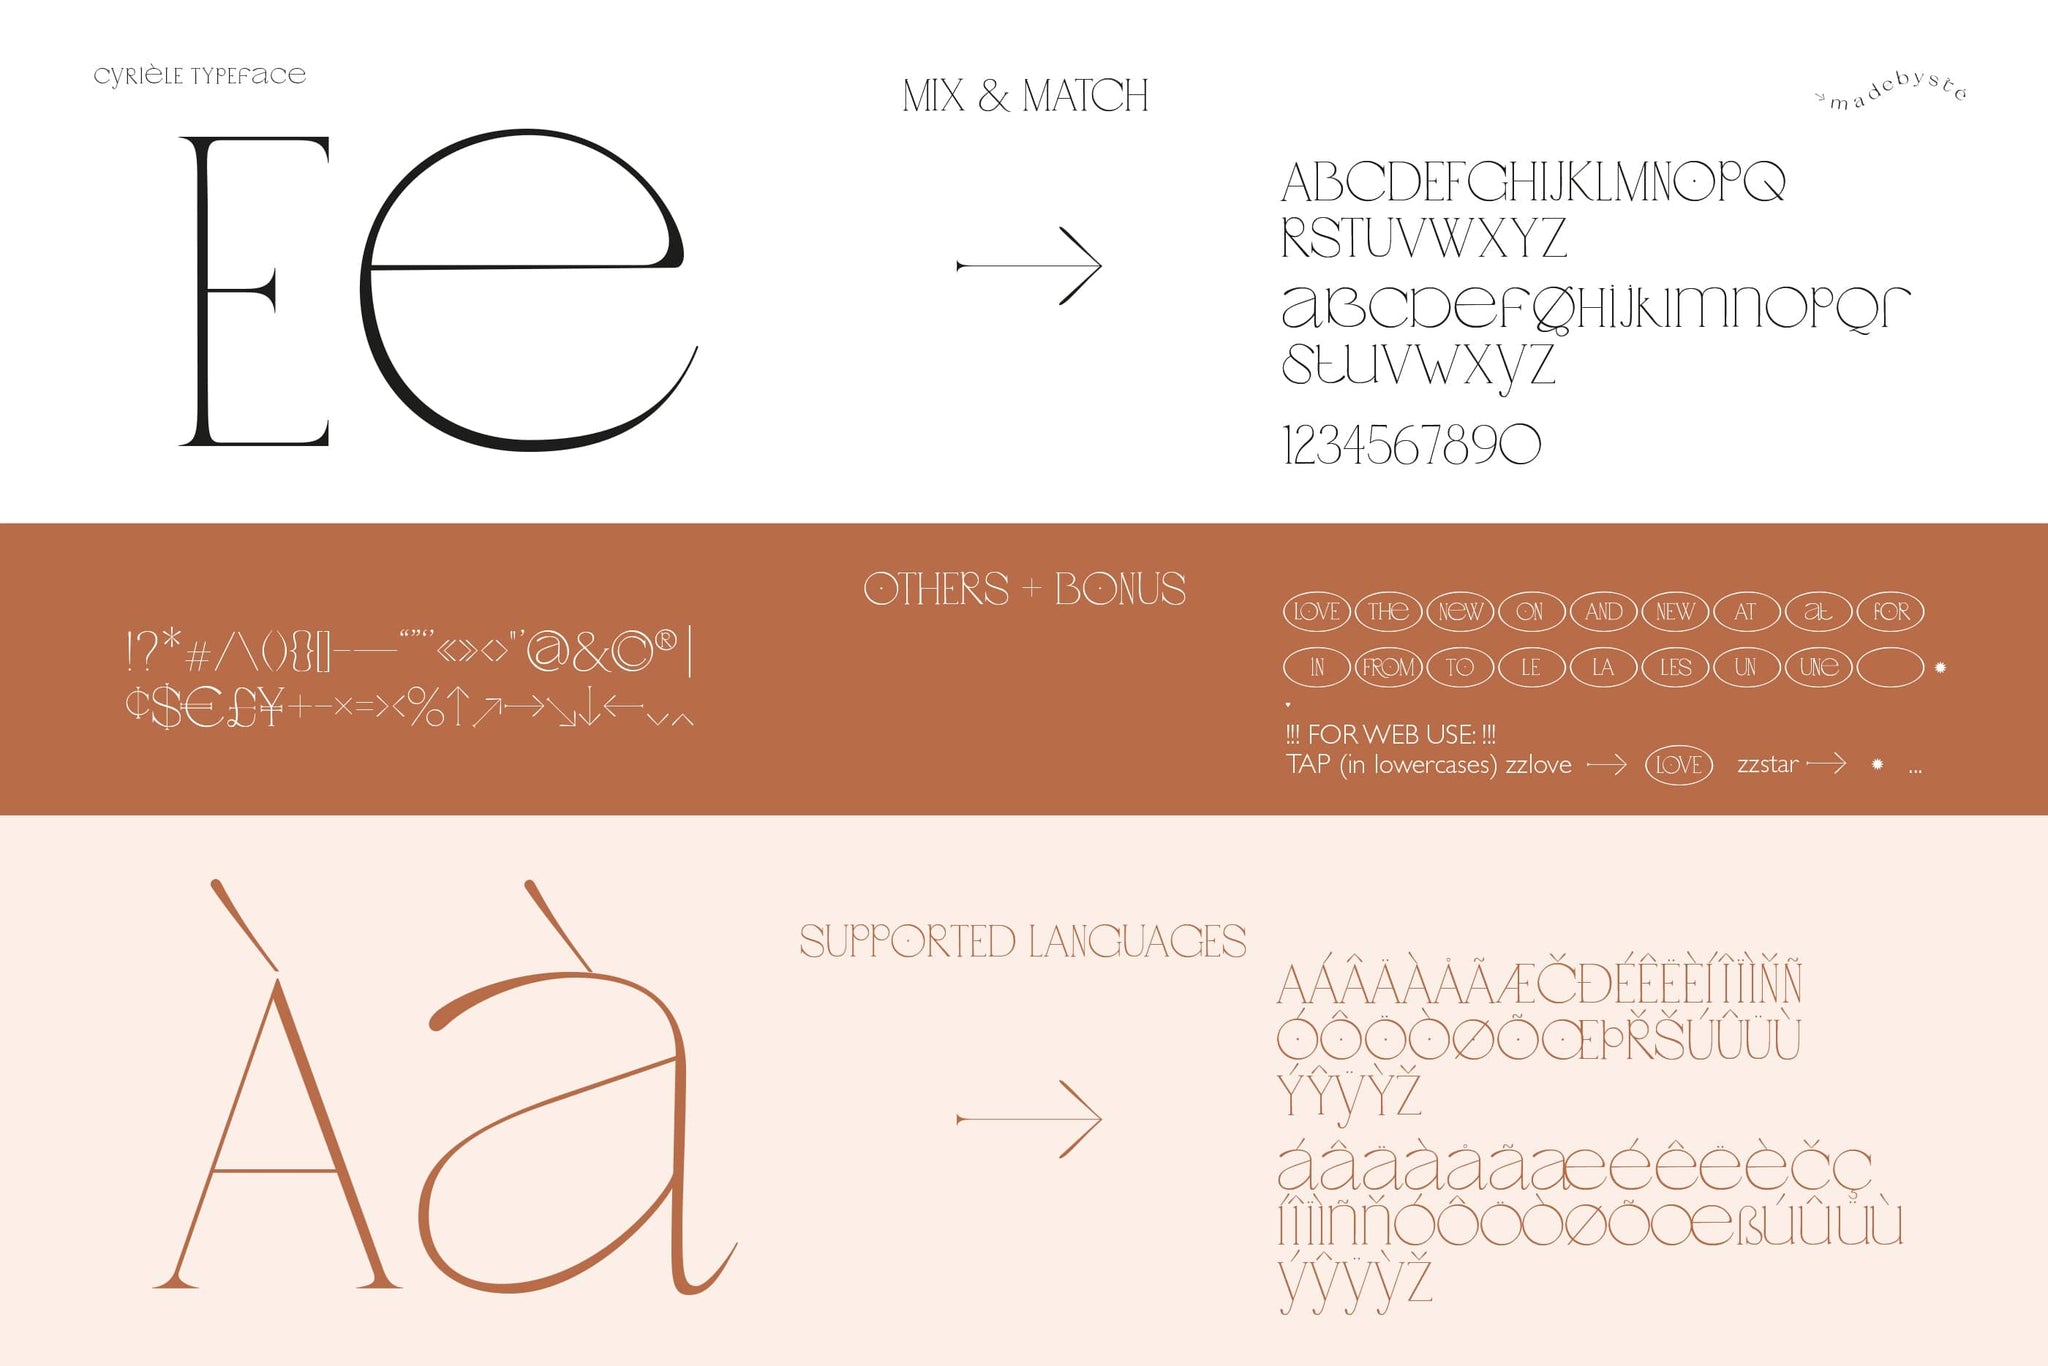 Cyrièle Typeface